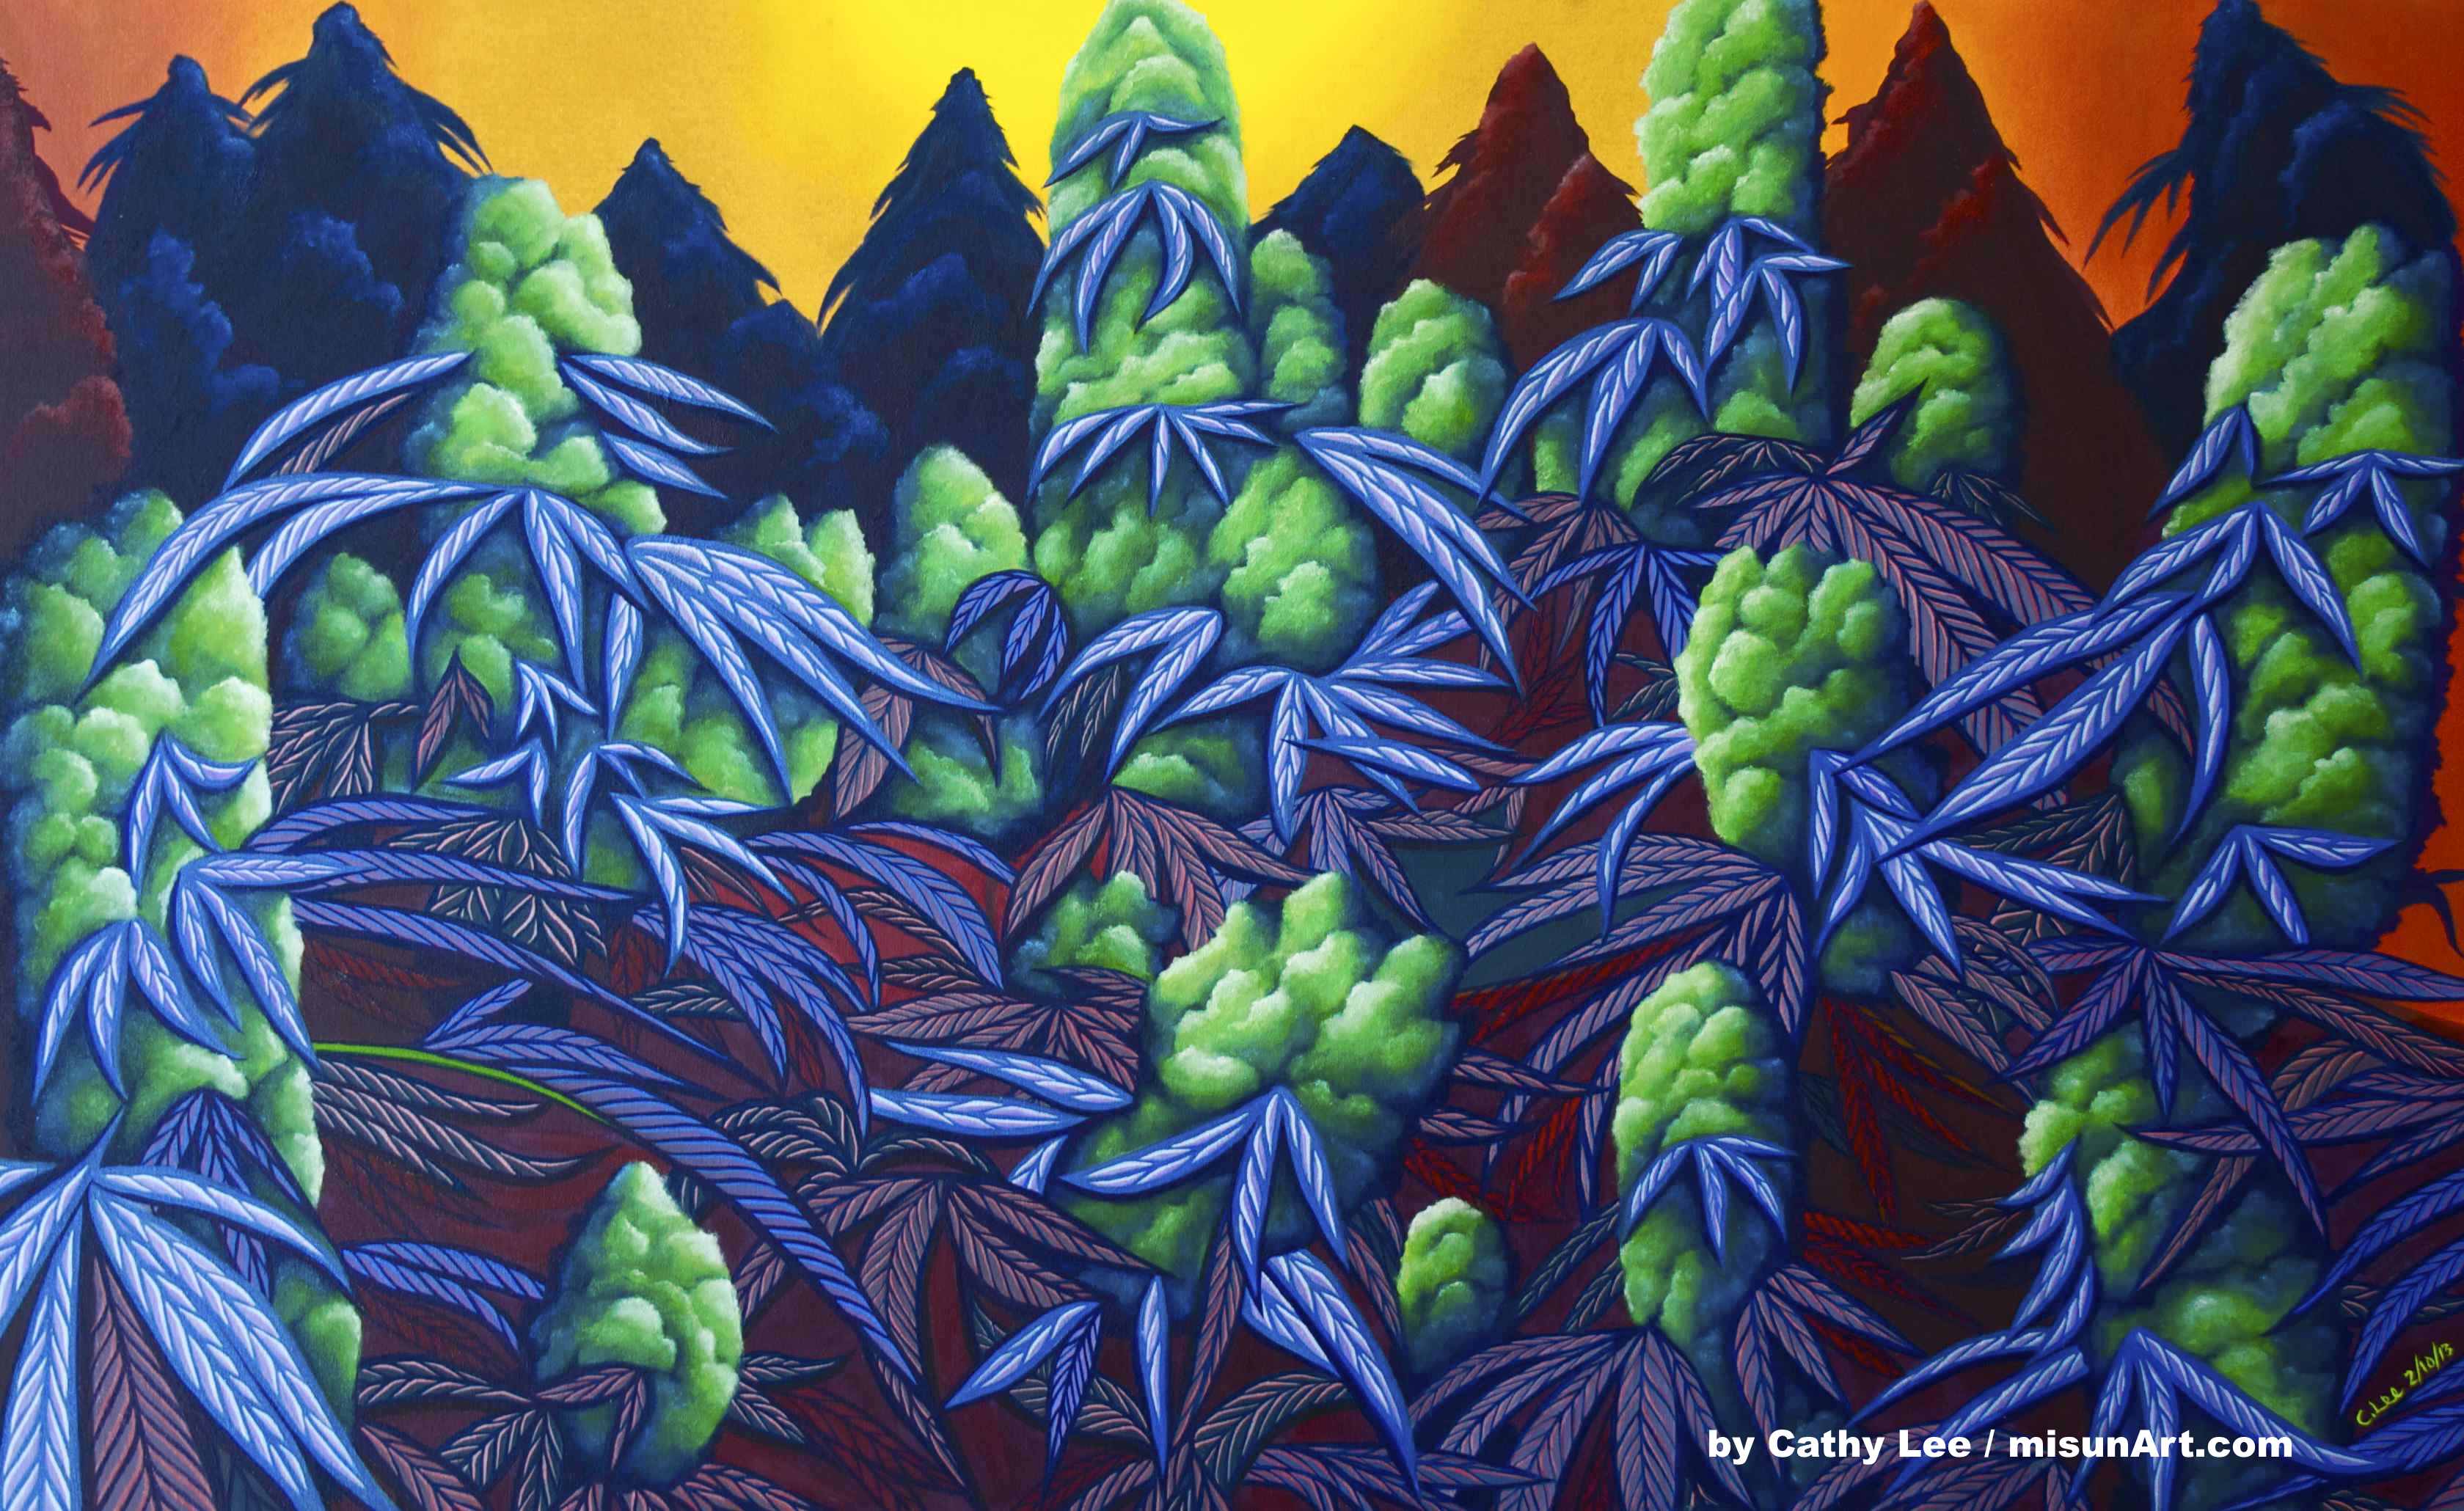 Cathy Lee Featured Marijuana Artist Stoner Artwork